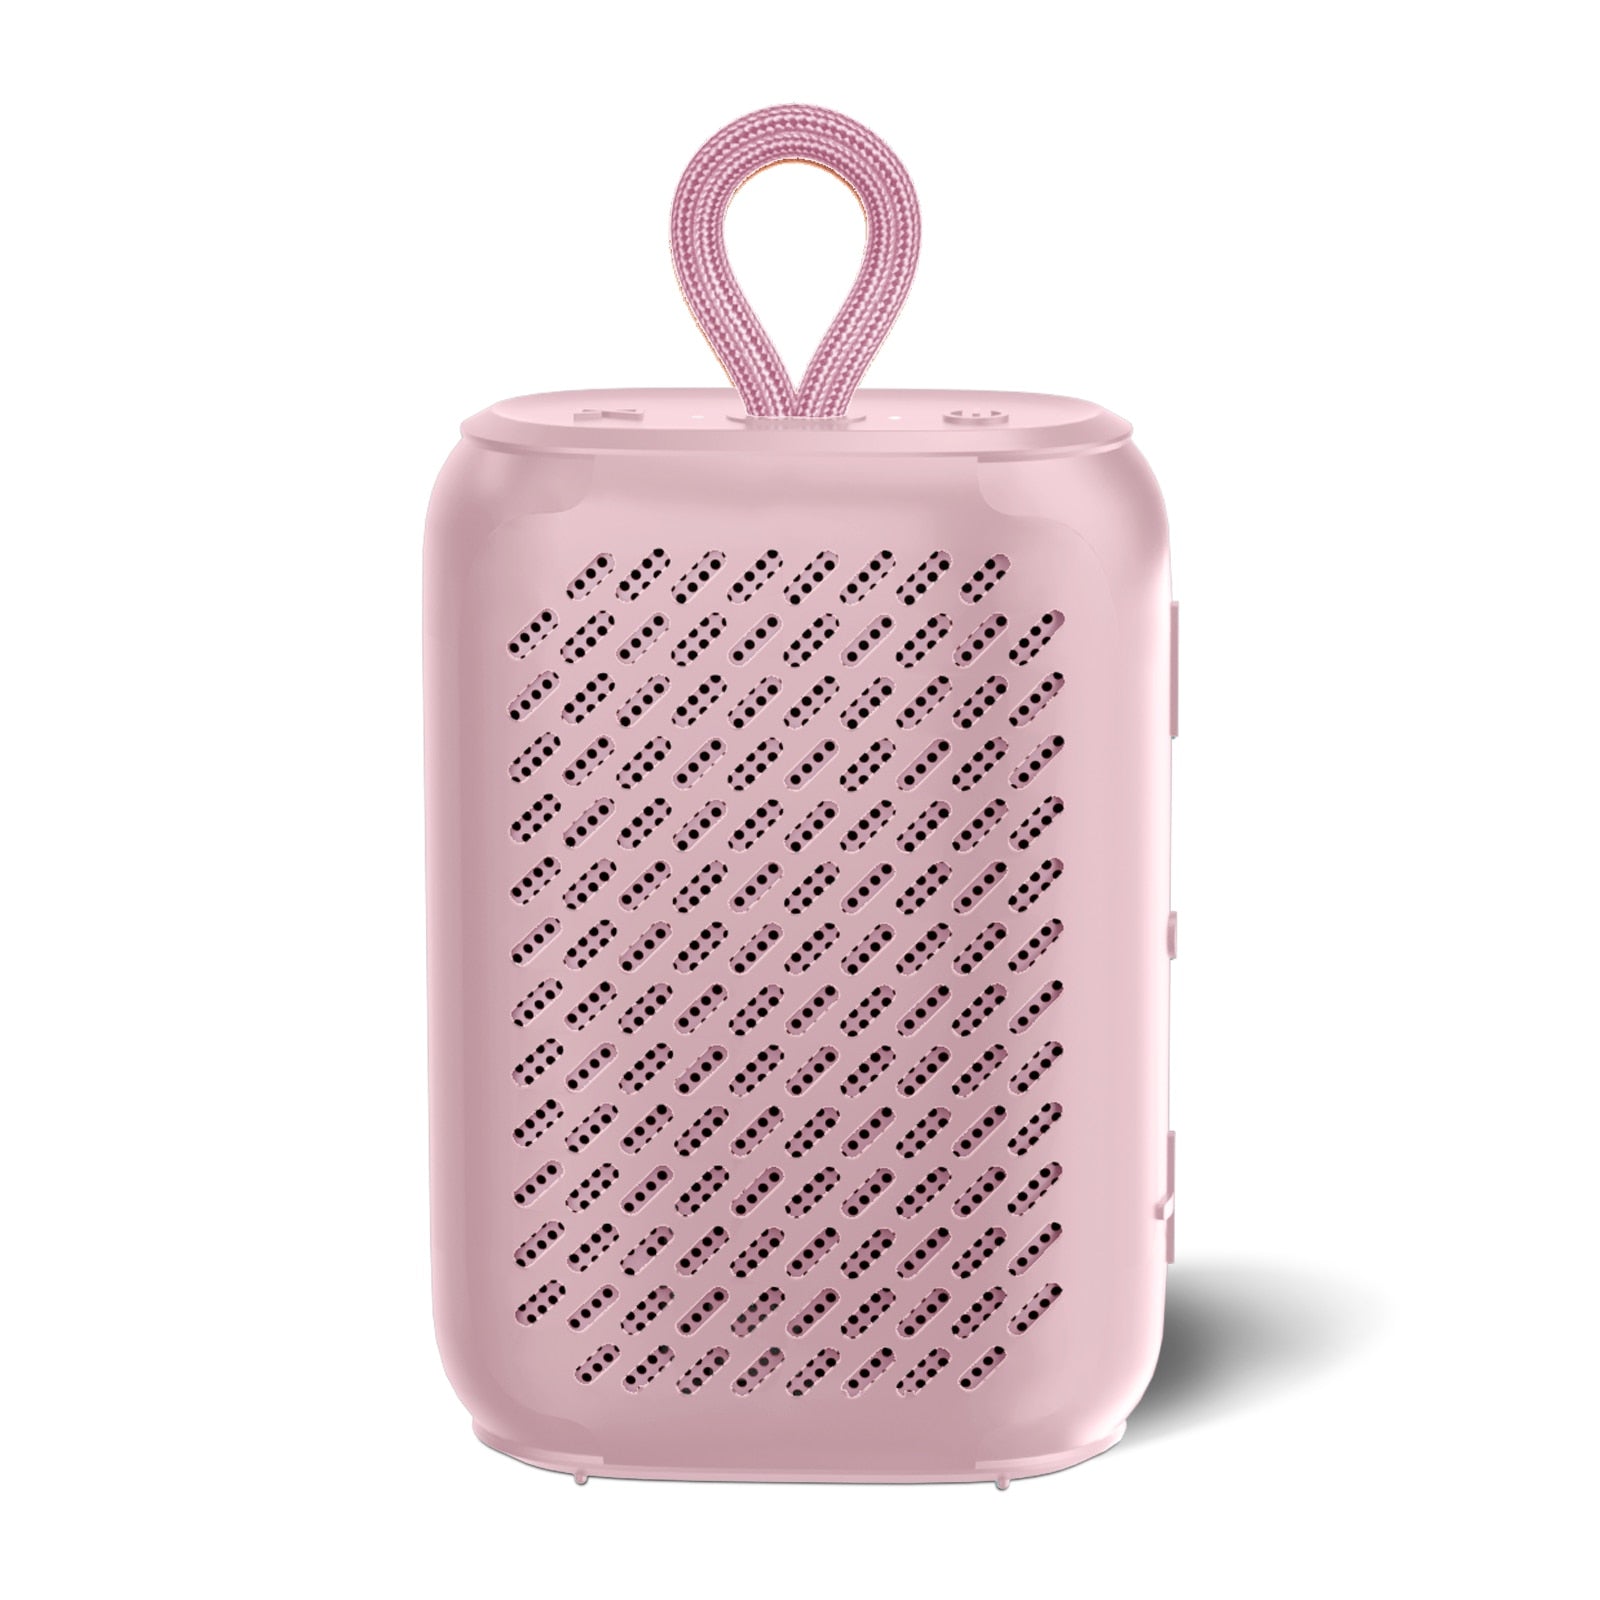 Mini Bluetooth Speaker: Big Sound, Waterproof